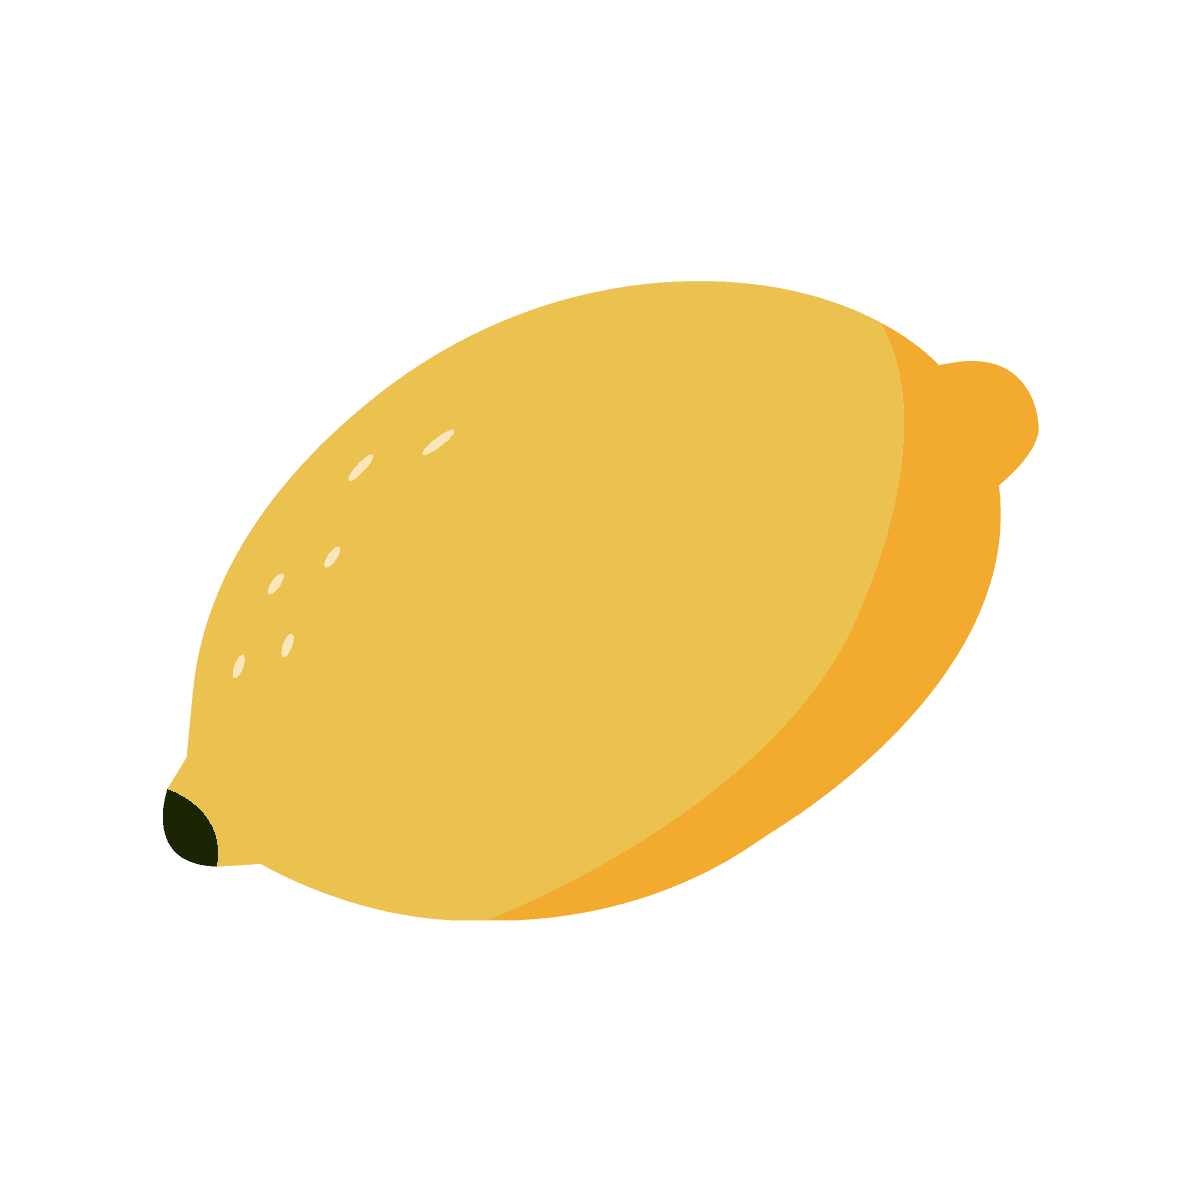 fresh and vibrant summery fruit illustration